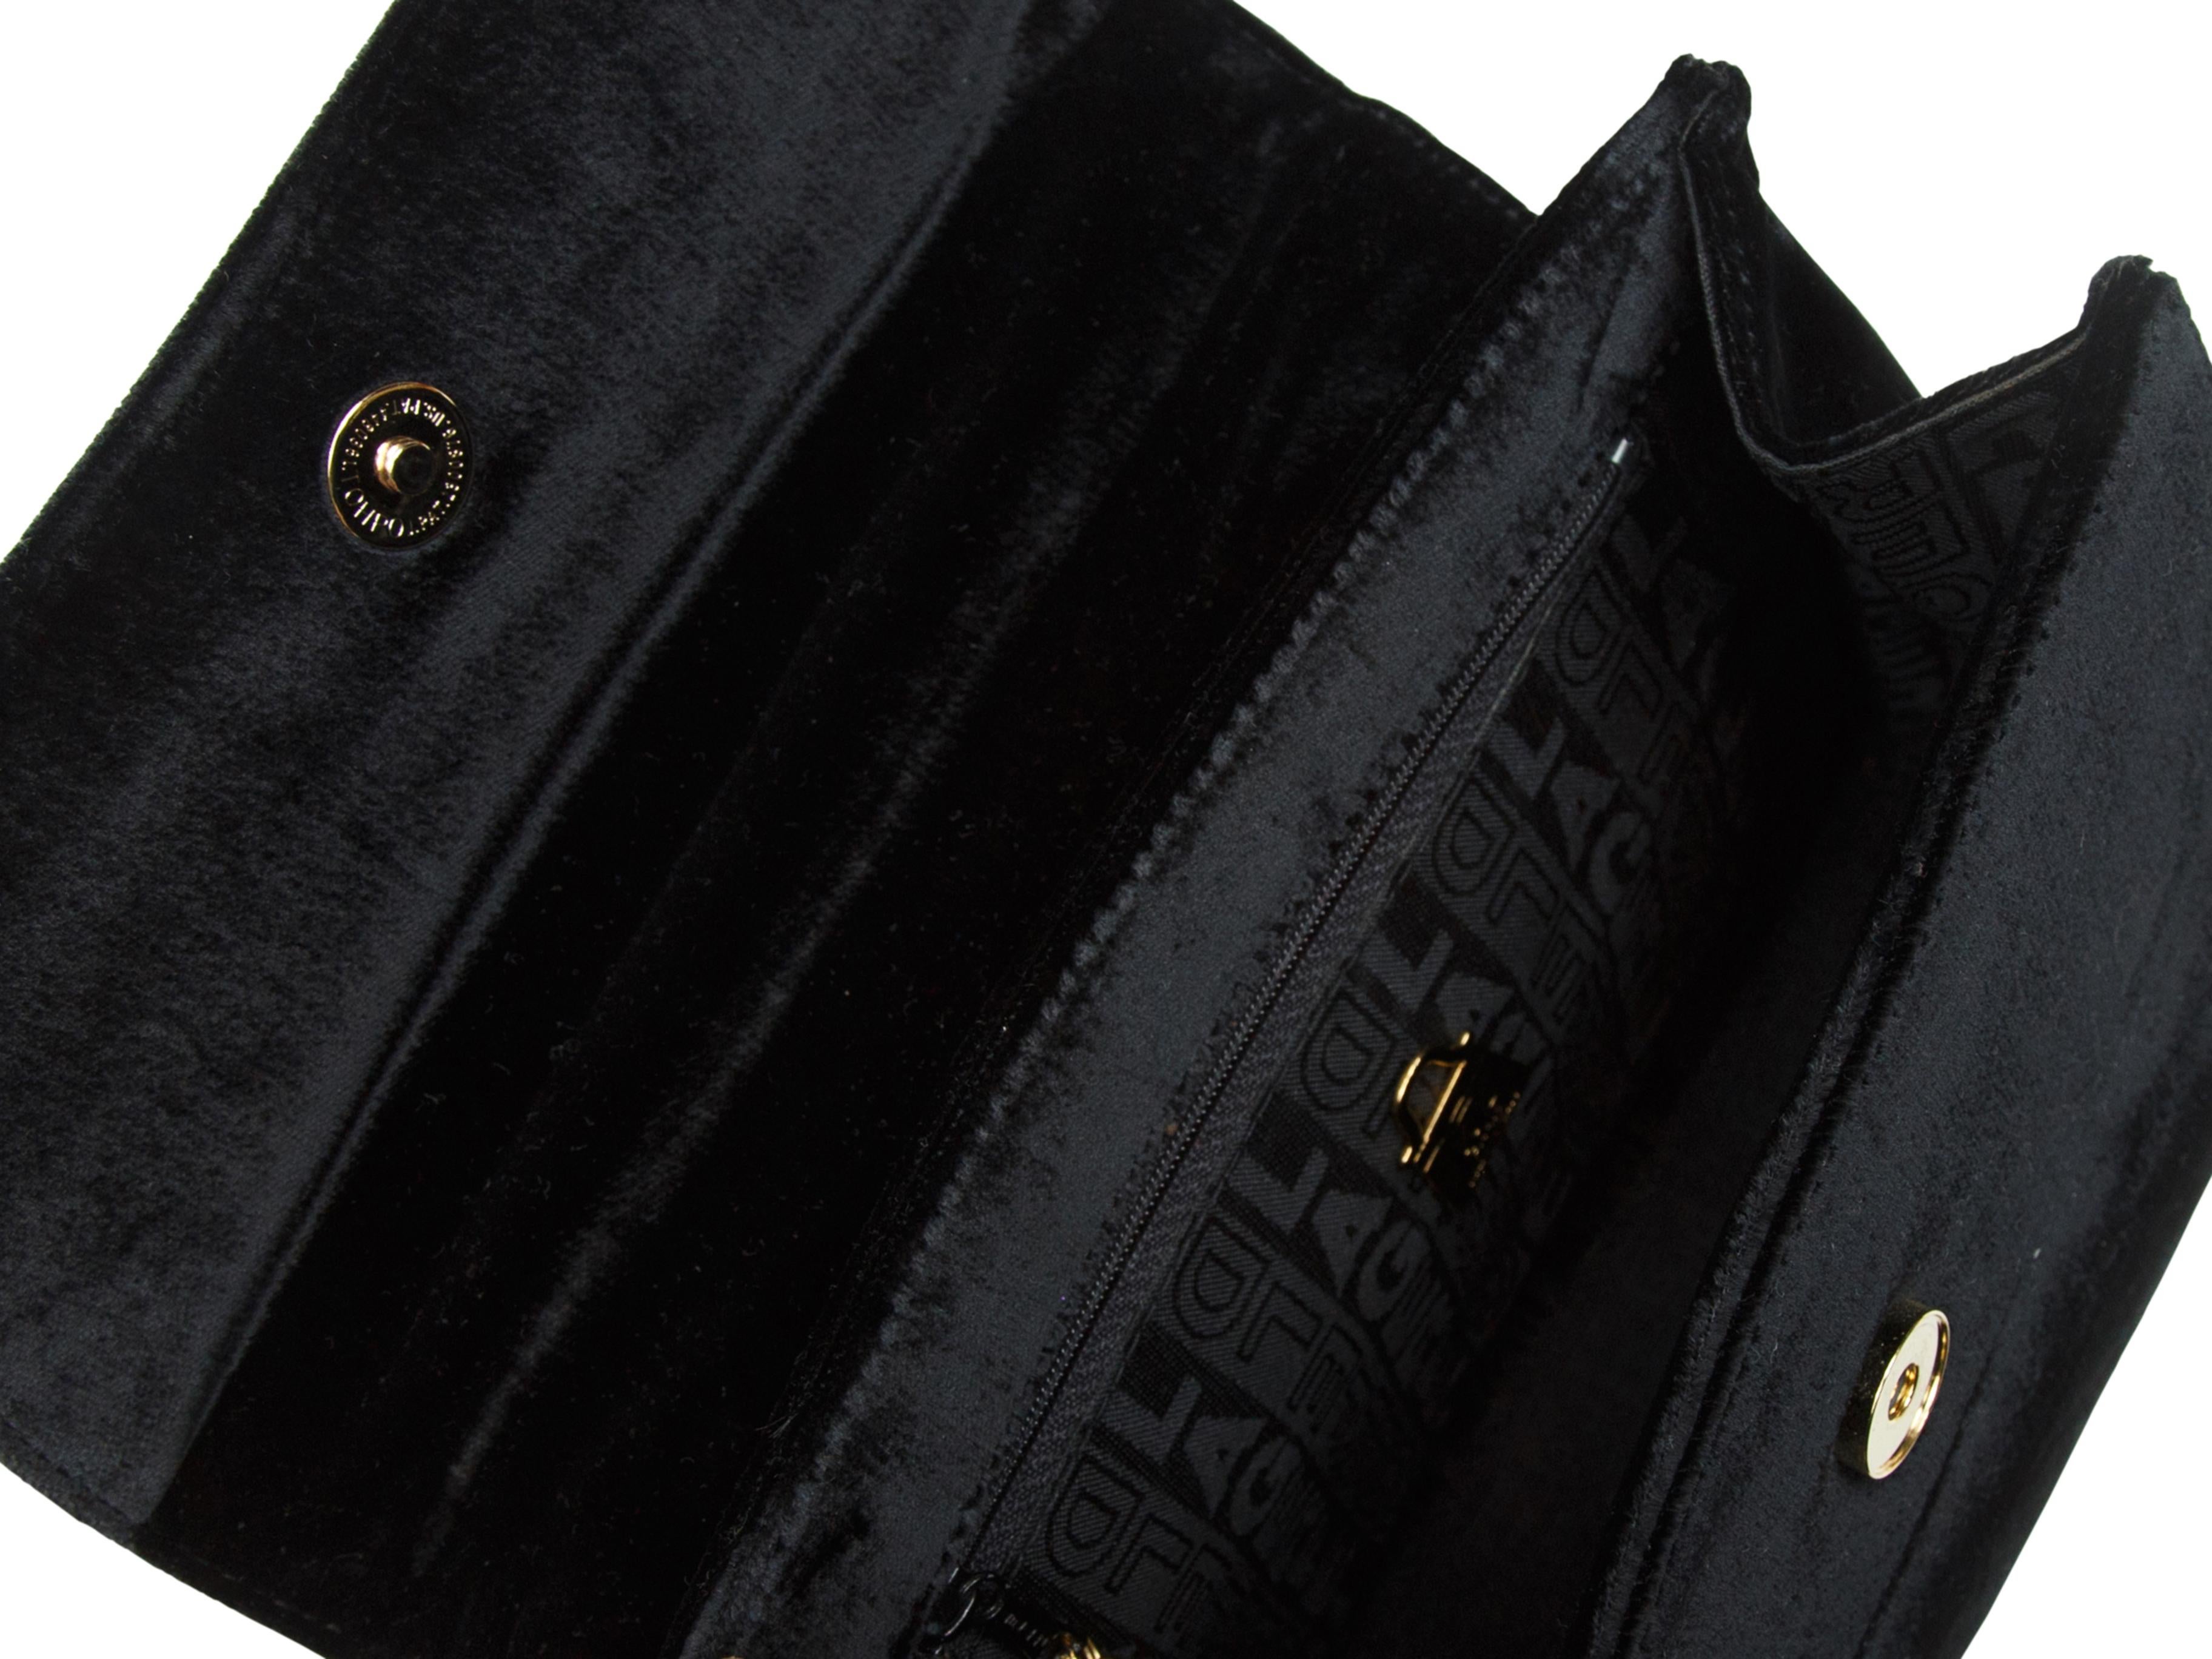 Product details: Vintage black velvet crossbody bag by Karl Lagerfeld. Gold-tone hardware. Single top handle. Detachable crossbody strap. Flap closure at front. 10